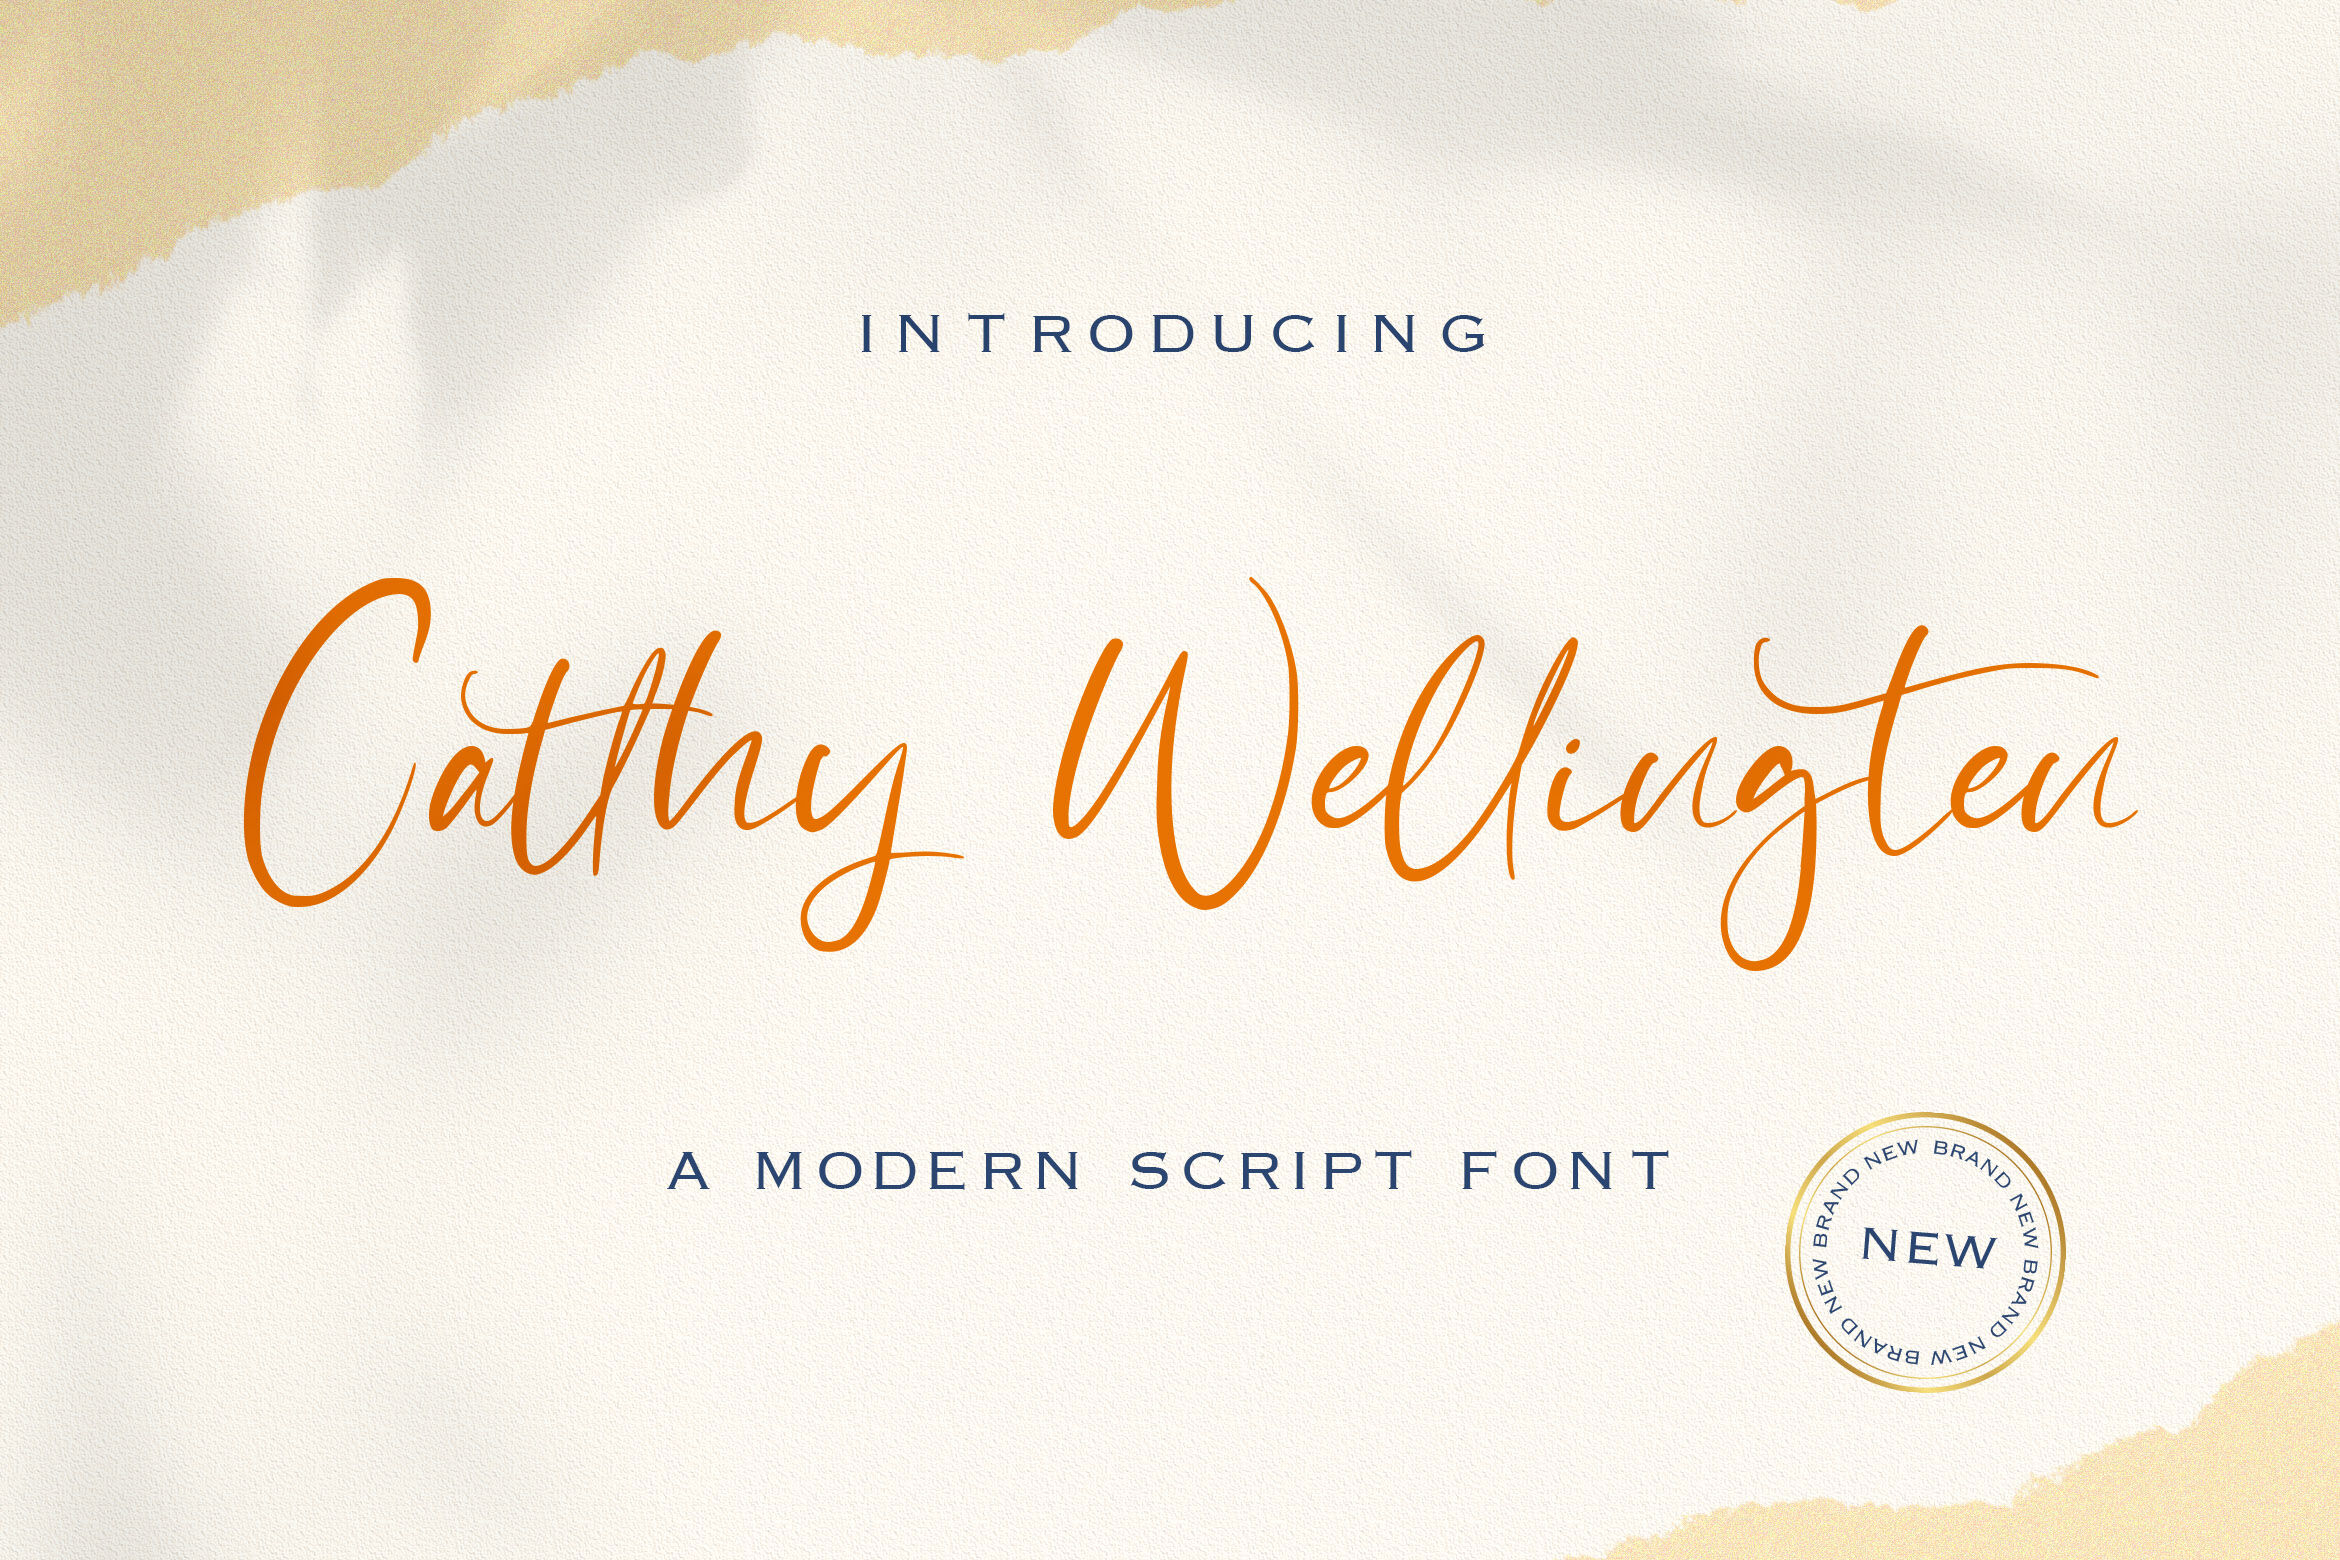 Catthy Wellingten Modern Script Font By Stringlabs Thehungryjpeg Com